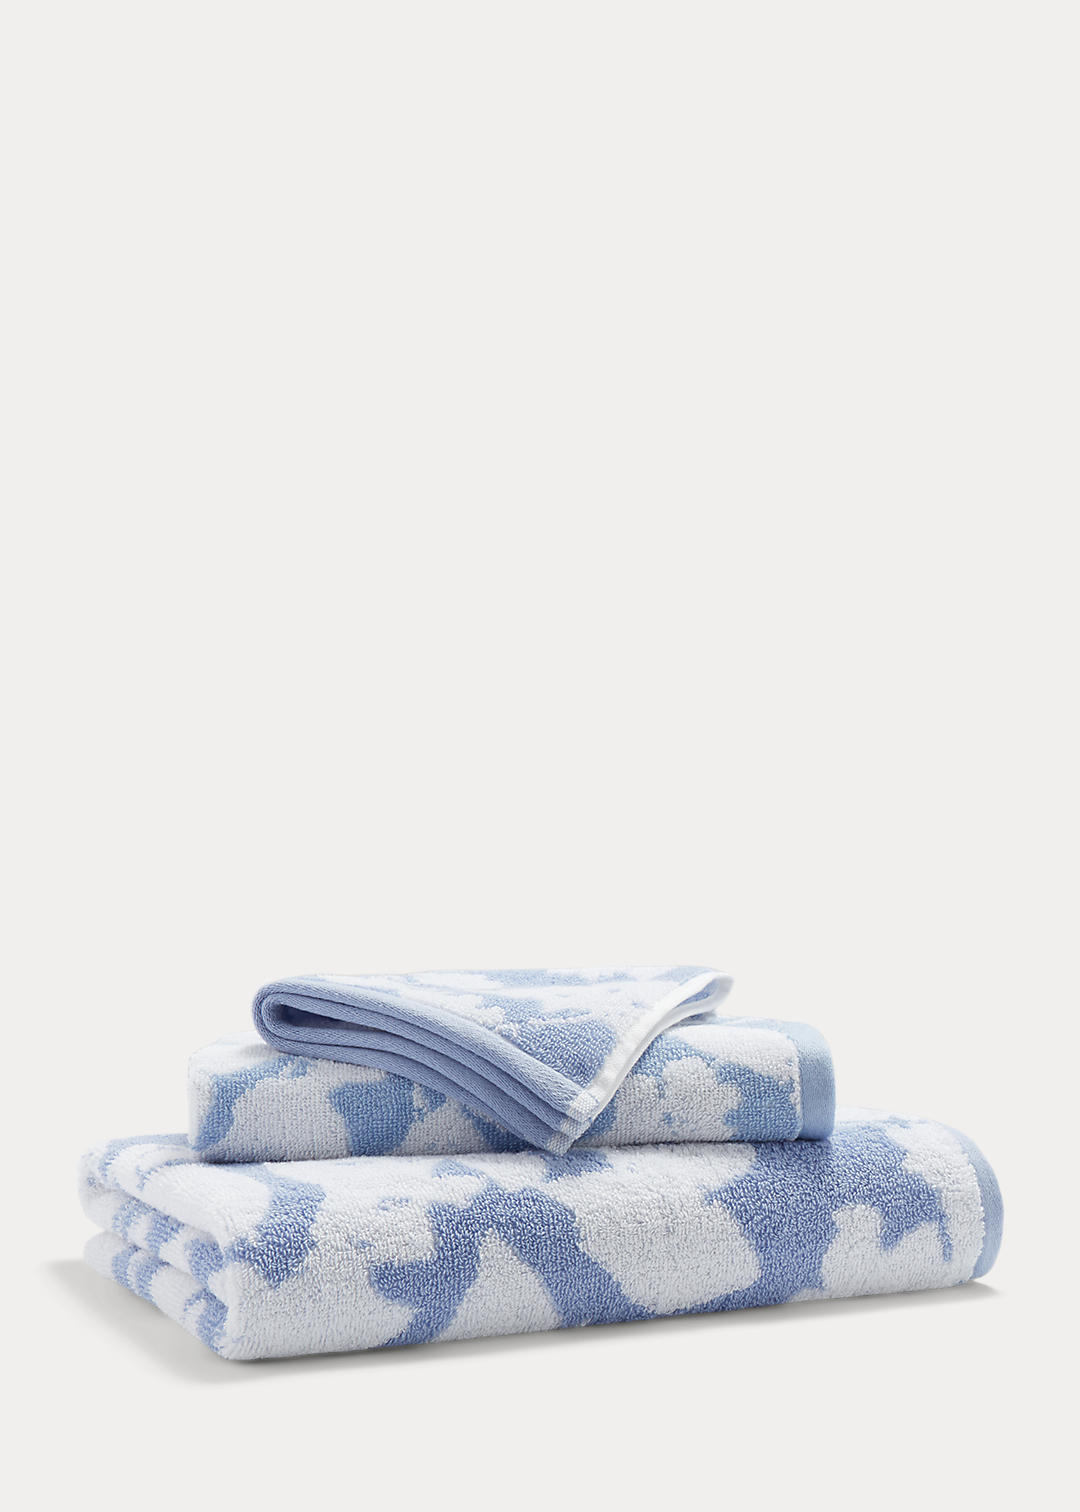 Lauren Home Sanders Floral Bath Towels